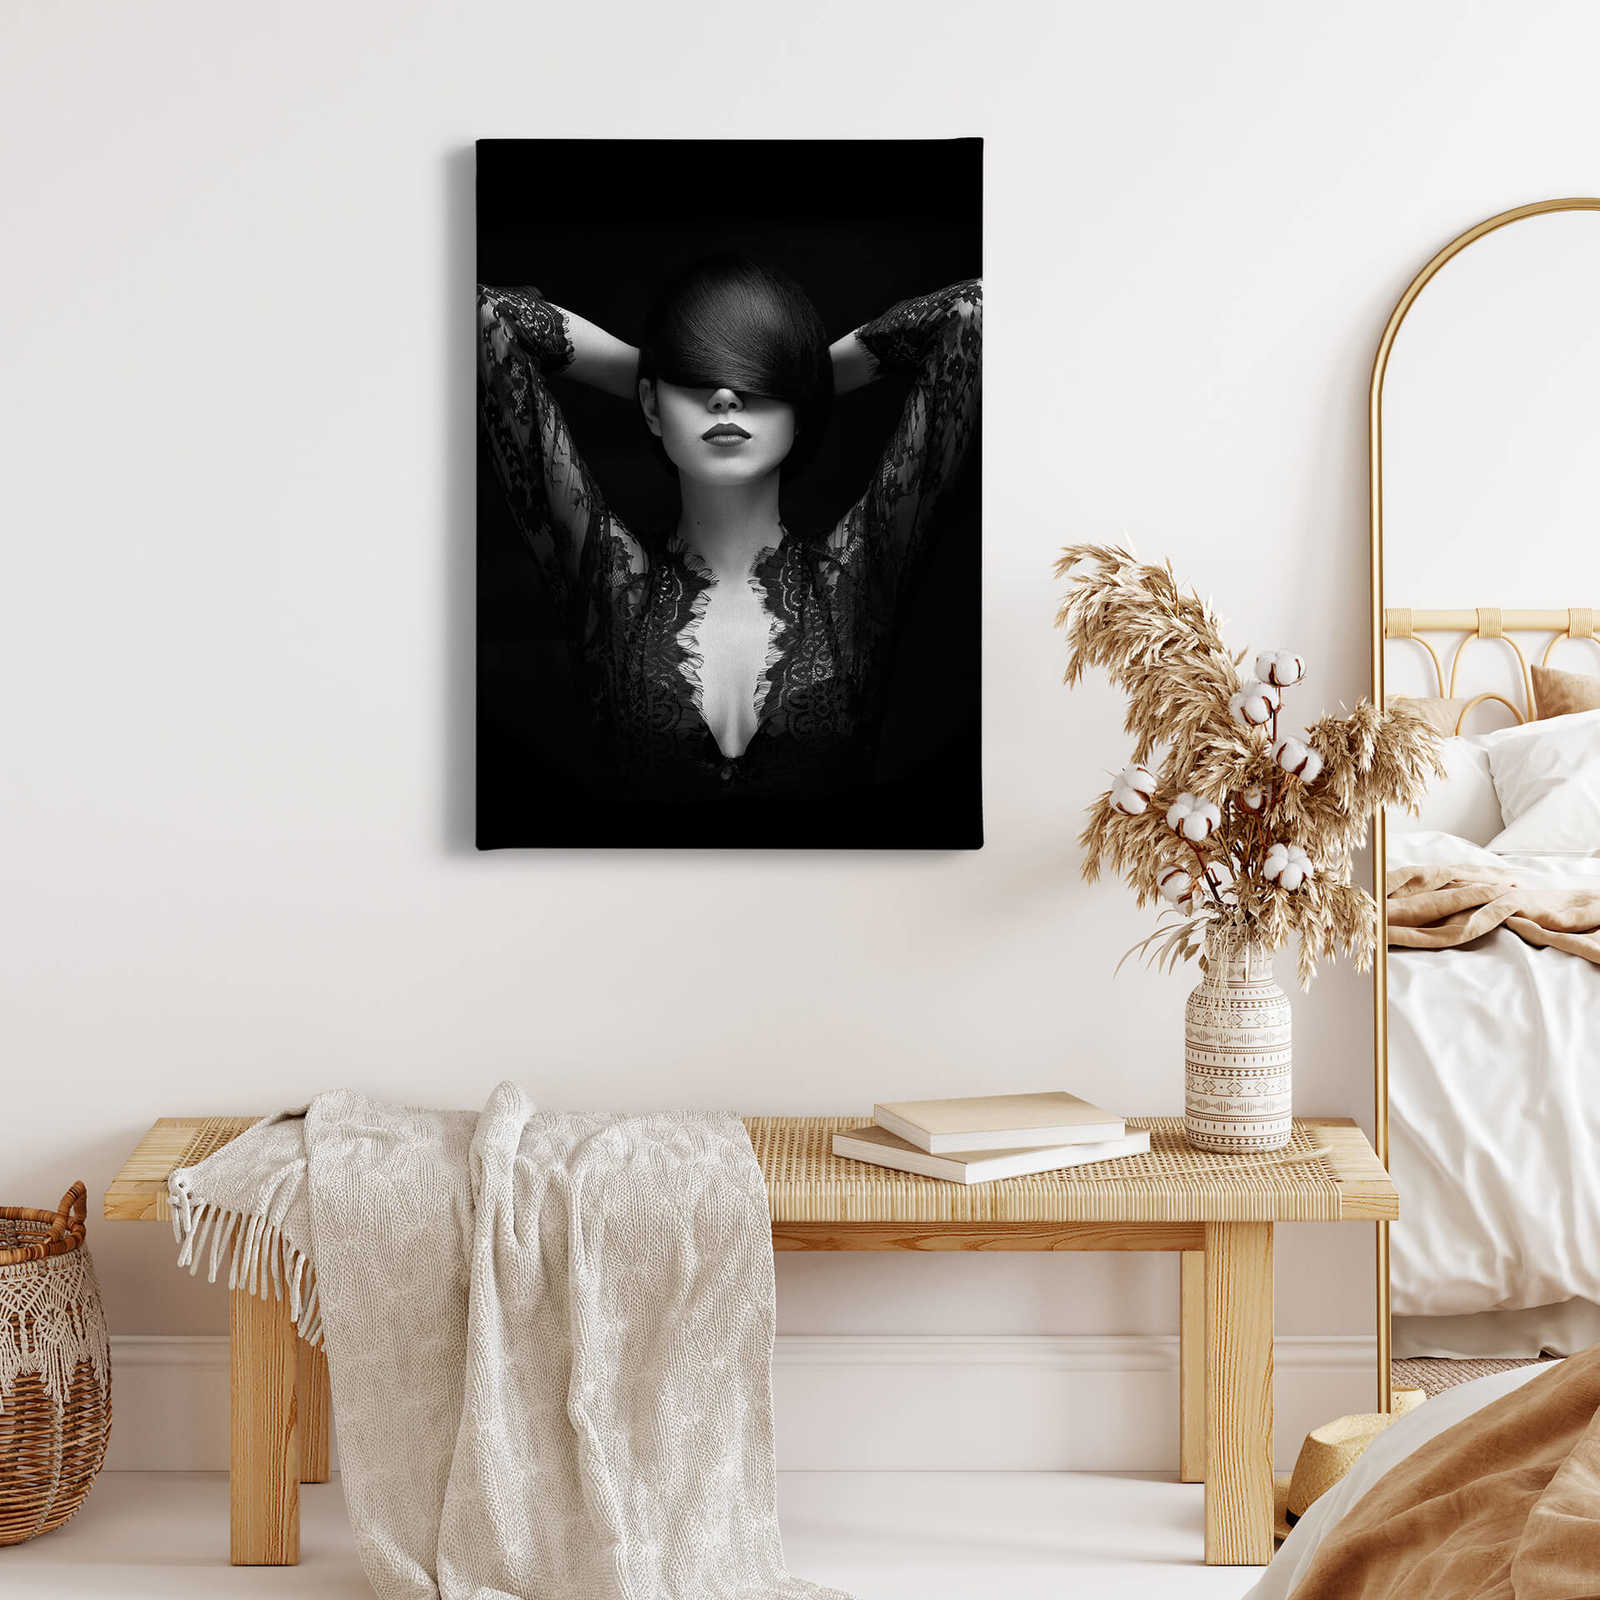             Blenkonov canvas print black and white women portrait
        